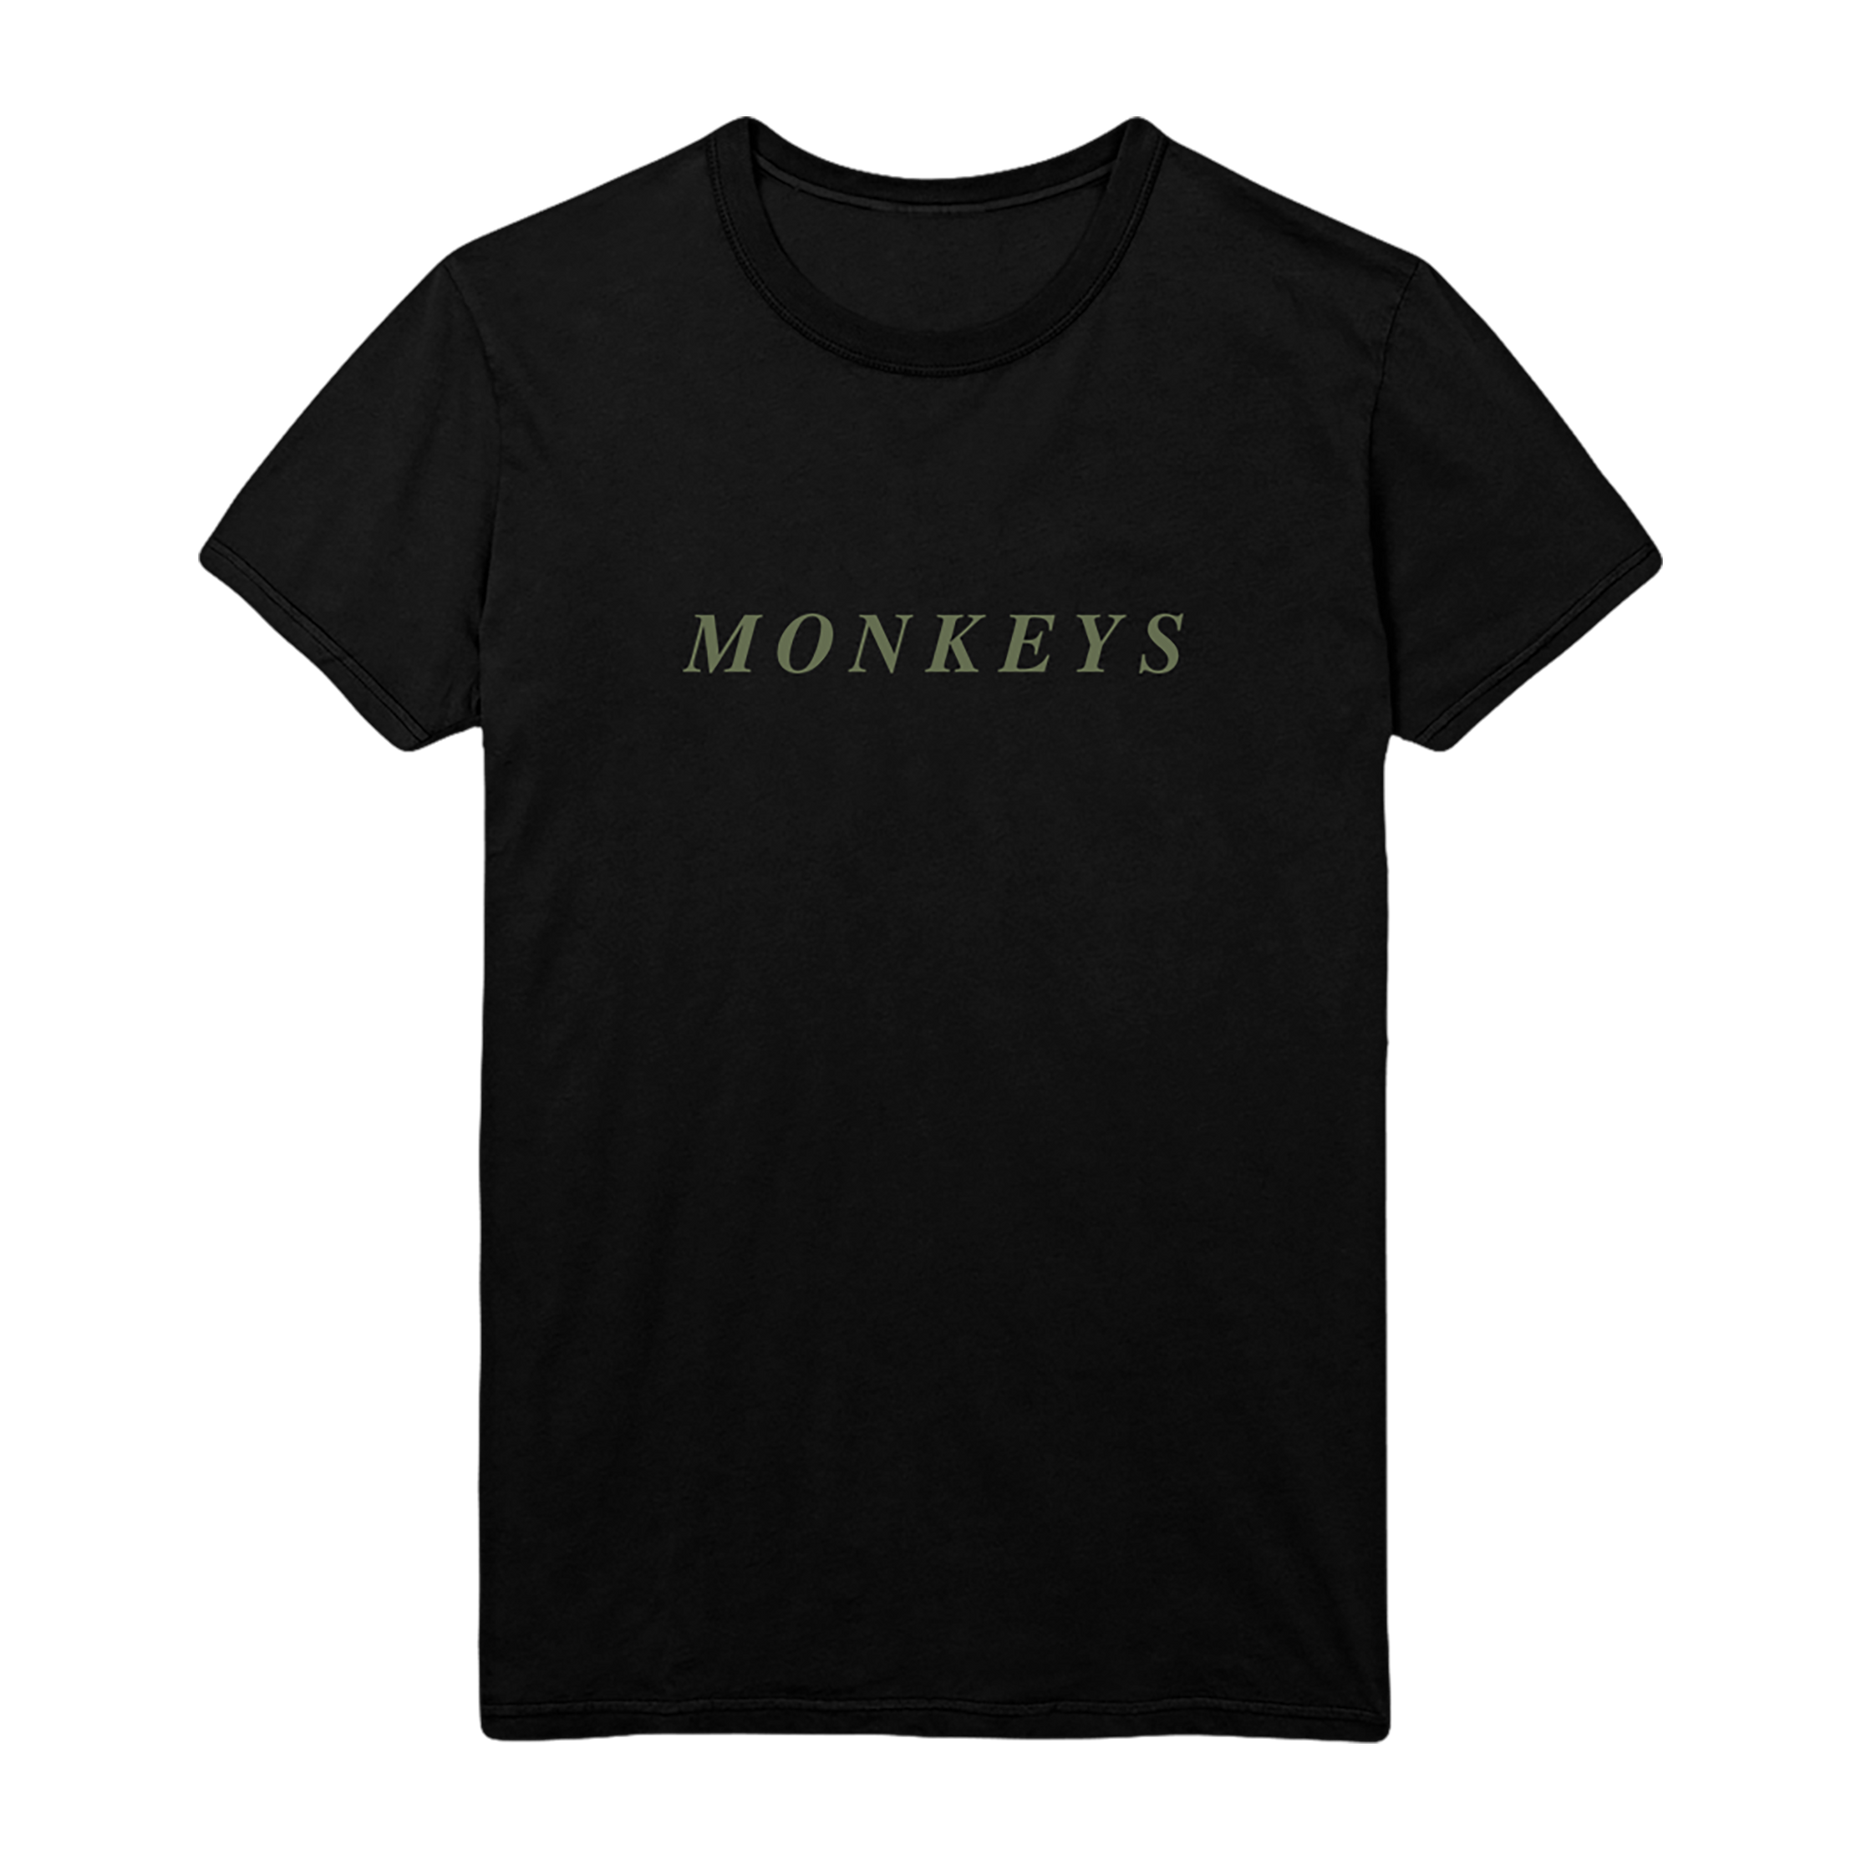 Monkeys Tee